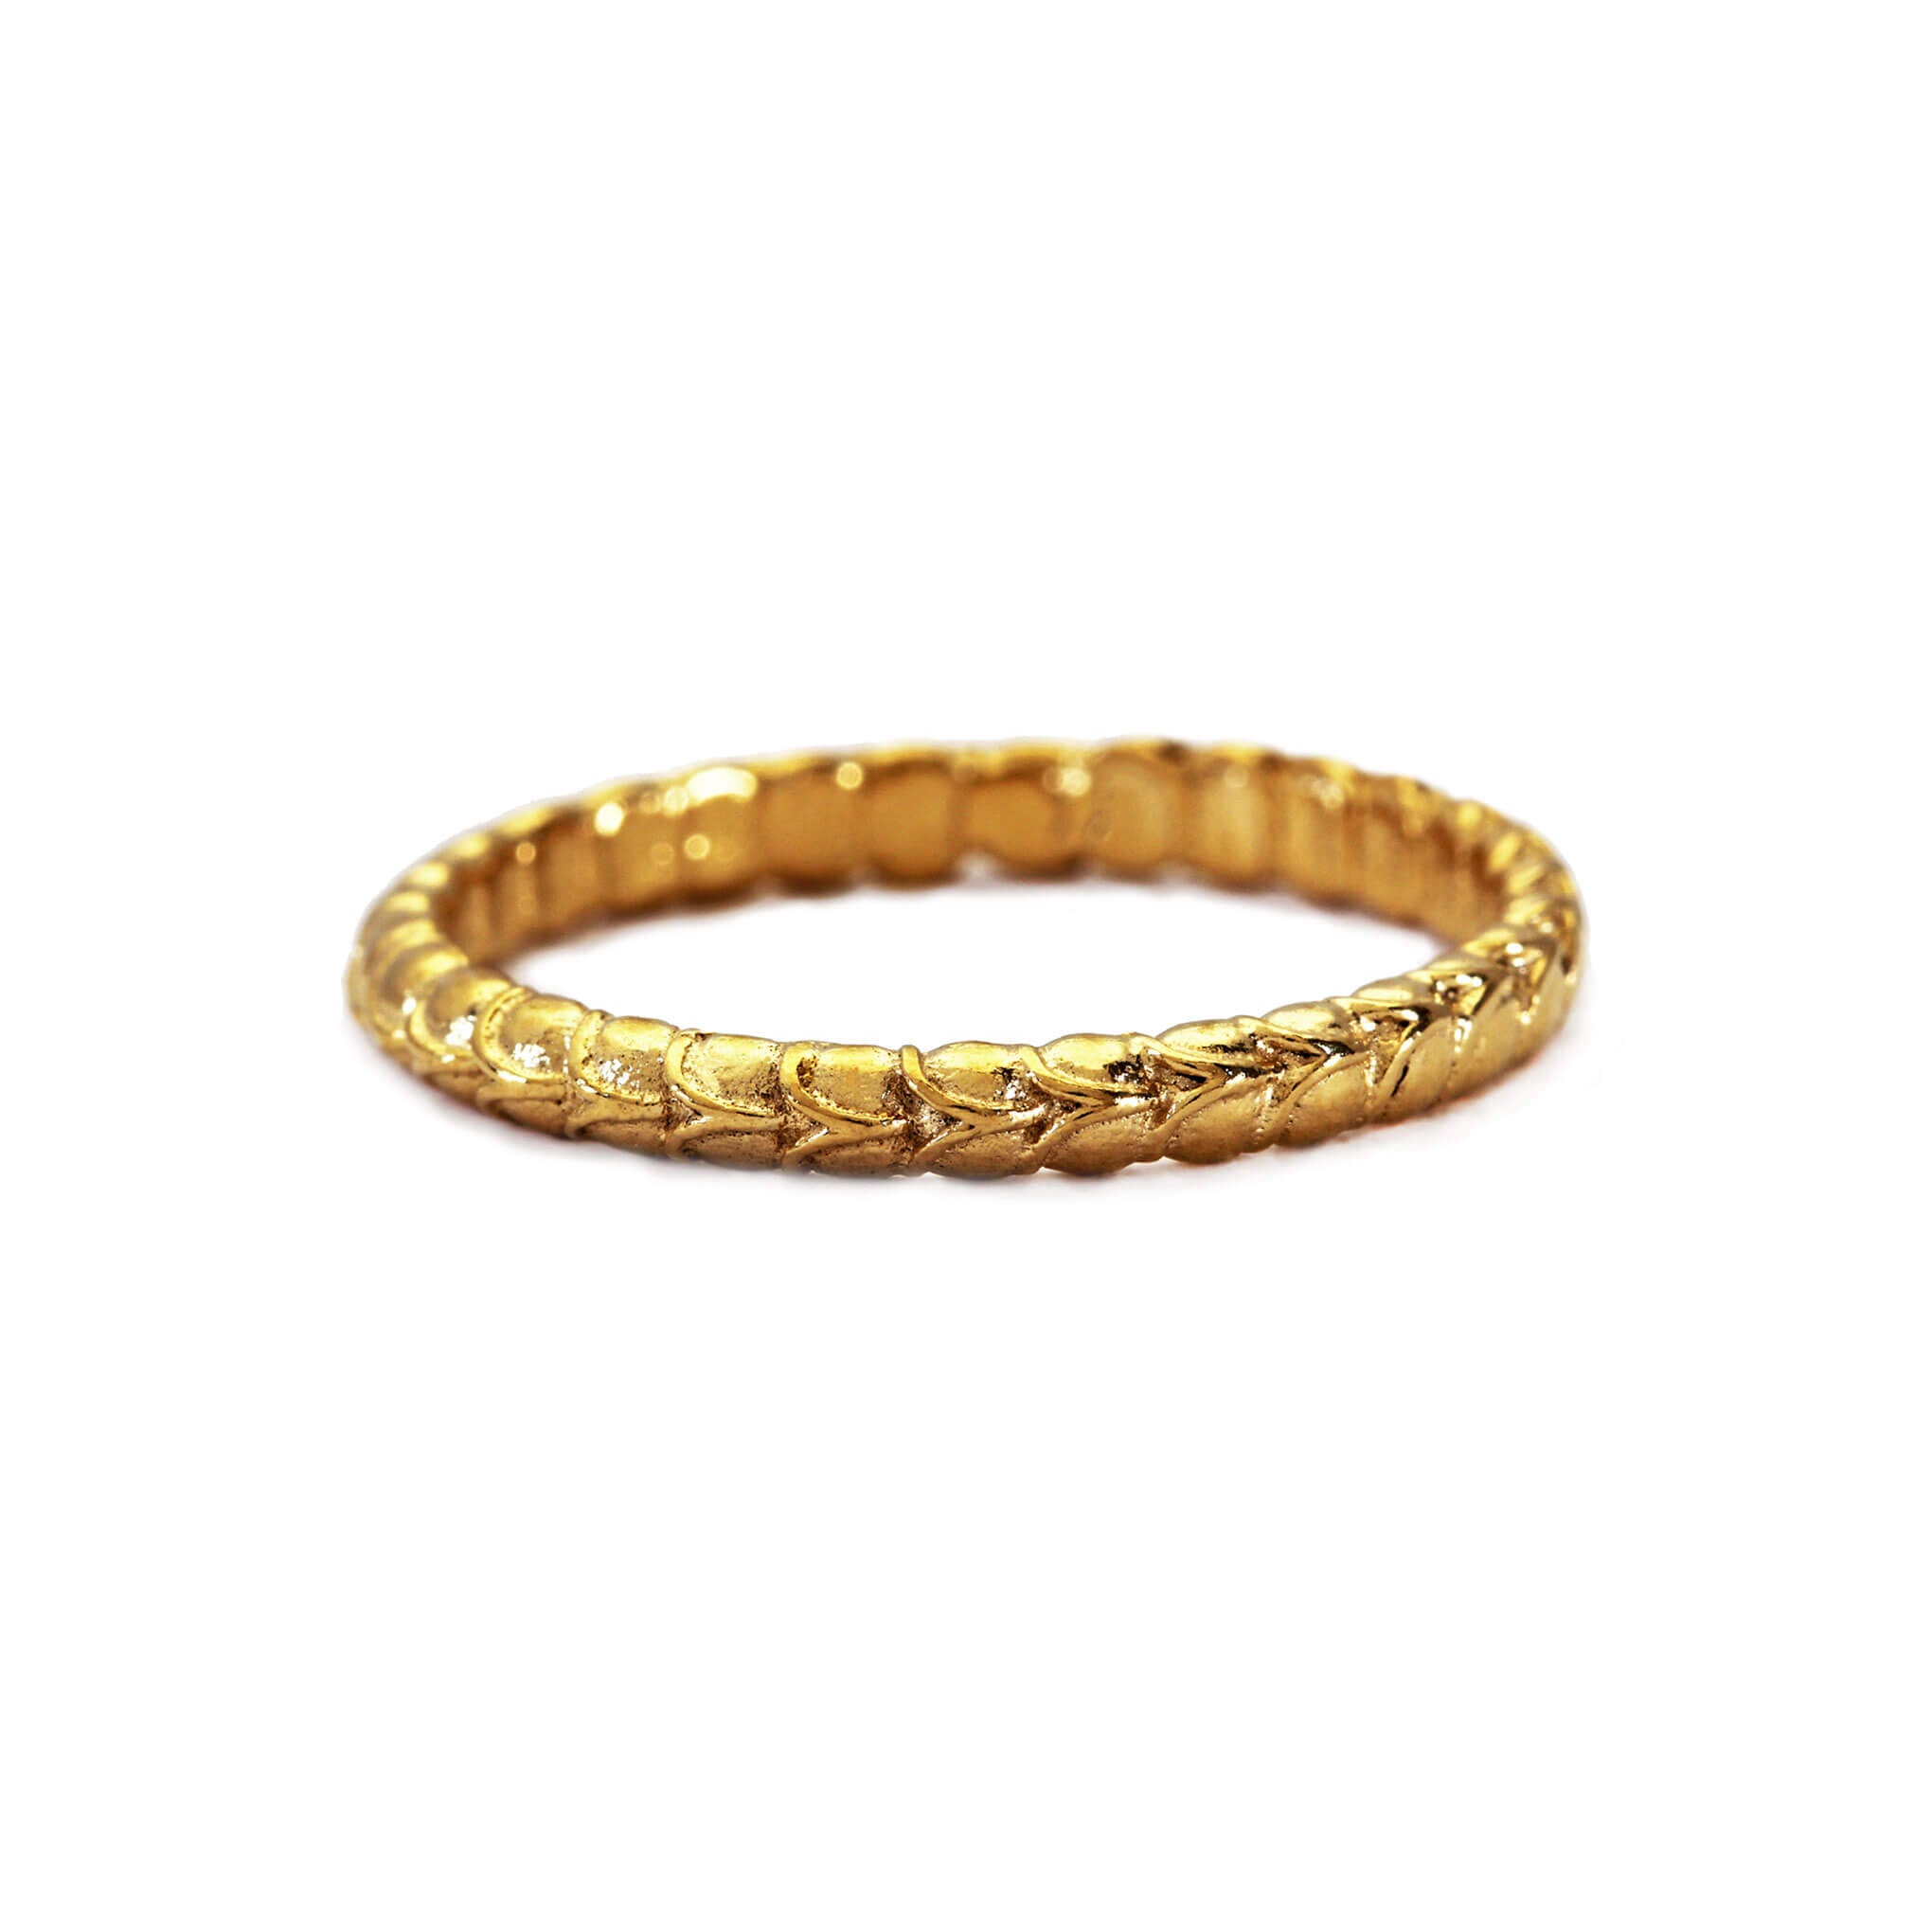 Arthropod Alternative Ring in yellow gold